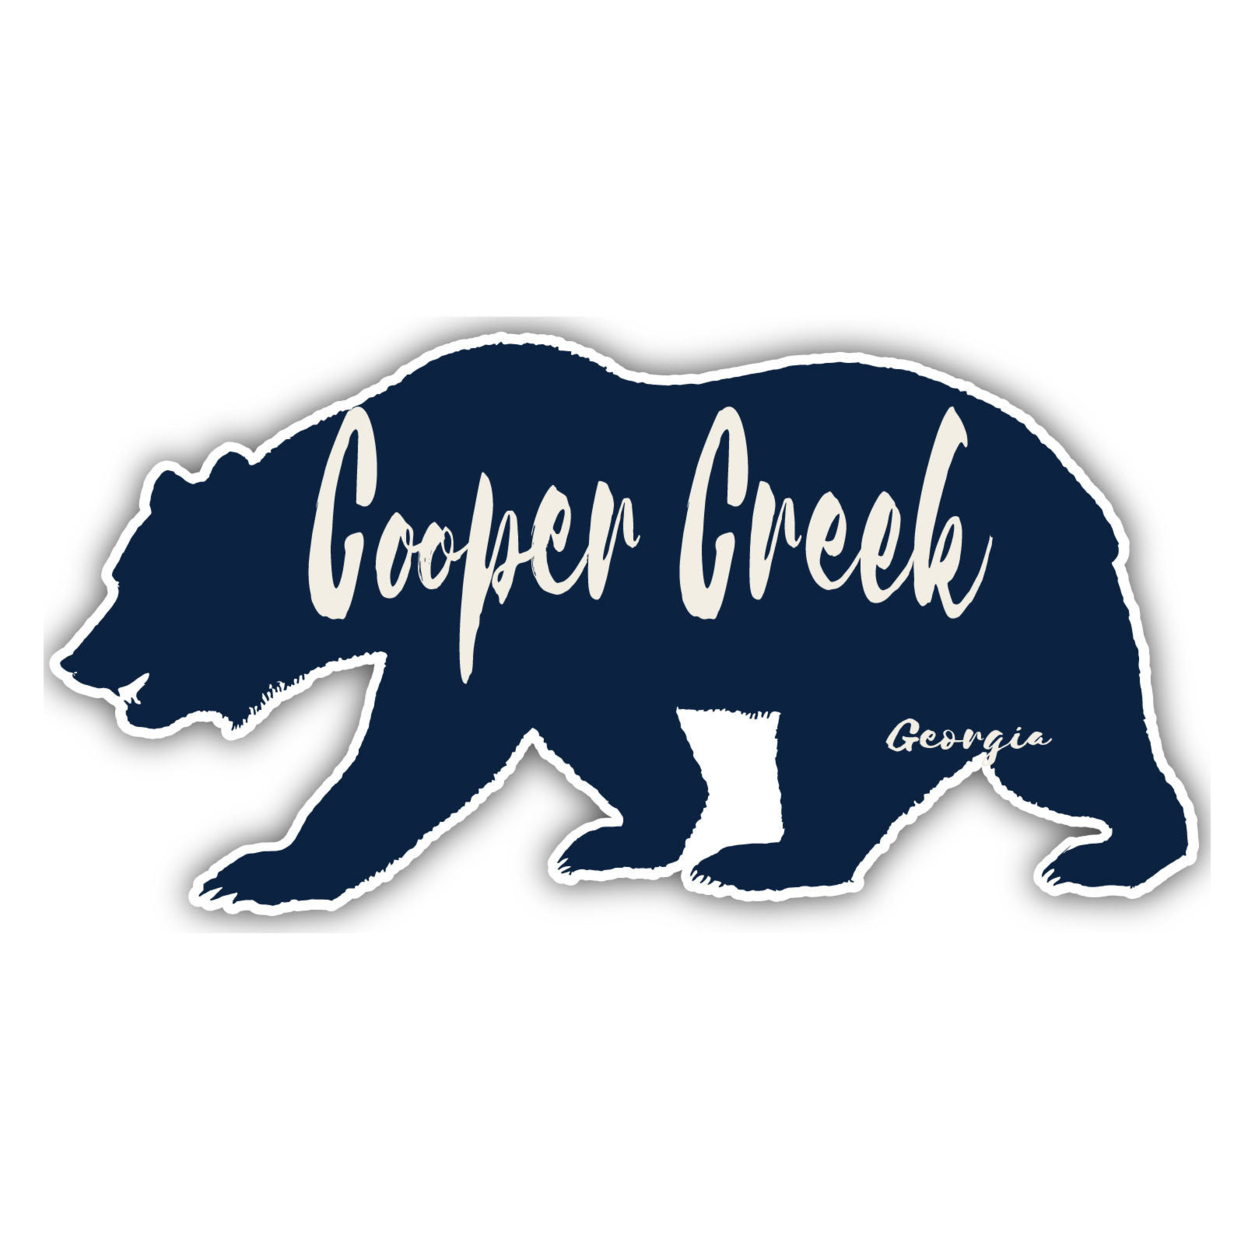 Cooper Creek Georgia Souvenir Decorative Stickers (Choose Theme And Size) - Single Unit, 2-Inch, Bear